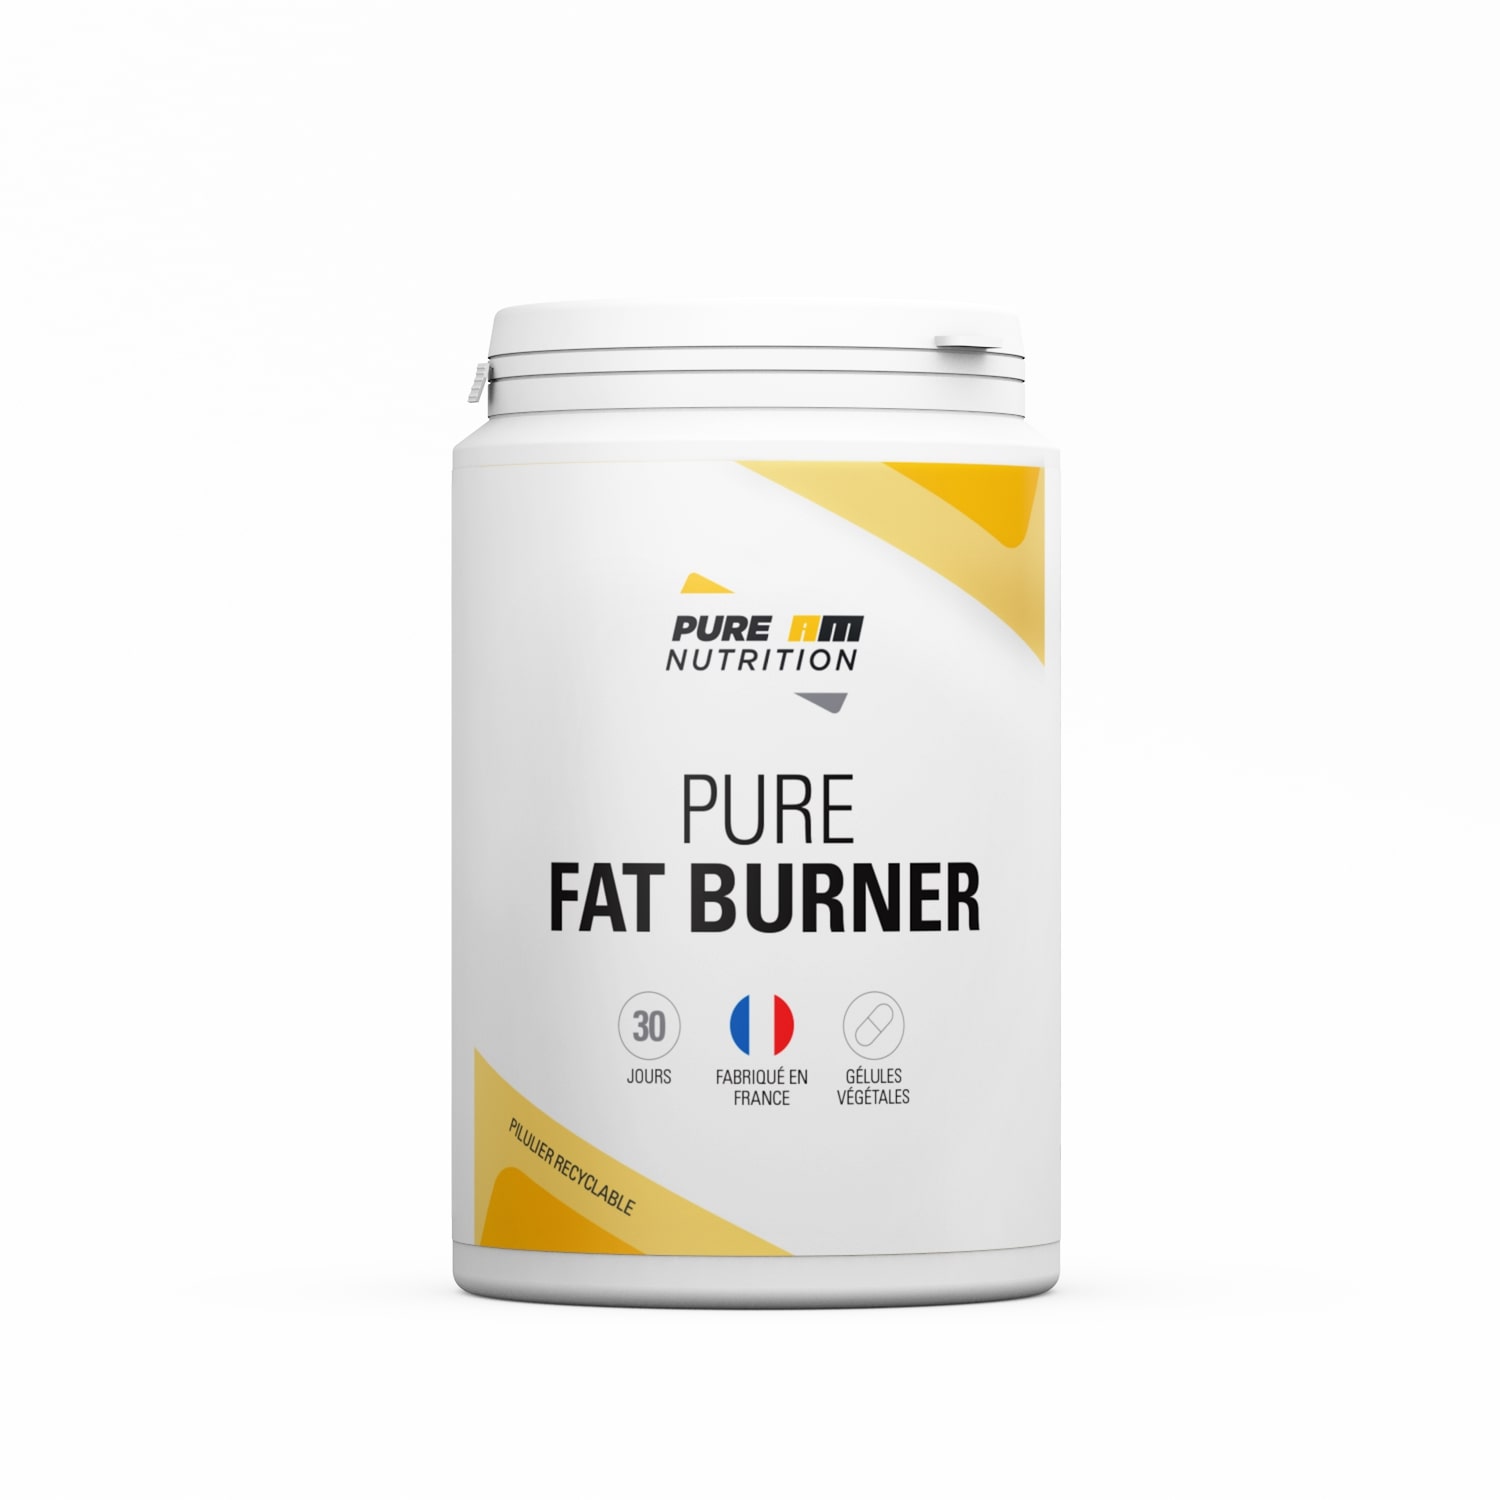  Pure AM Nutrition PURE Fat Burner